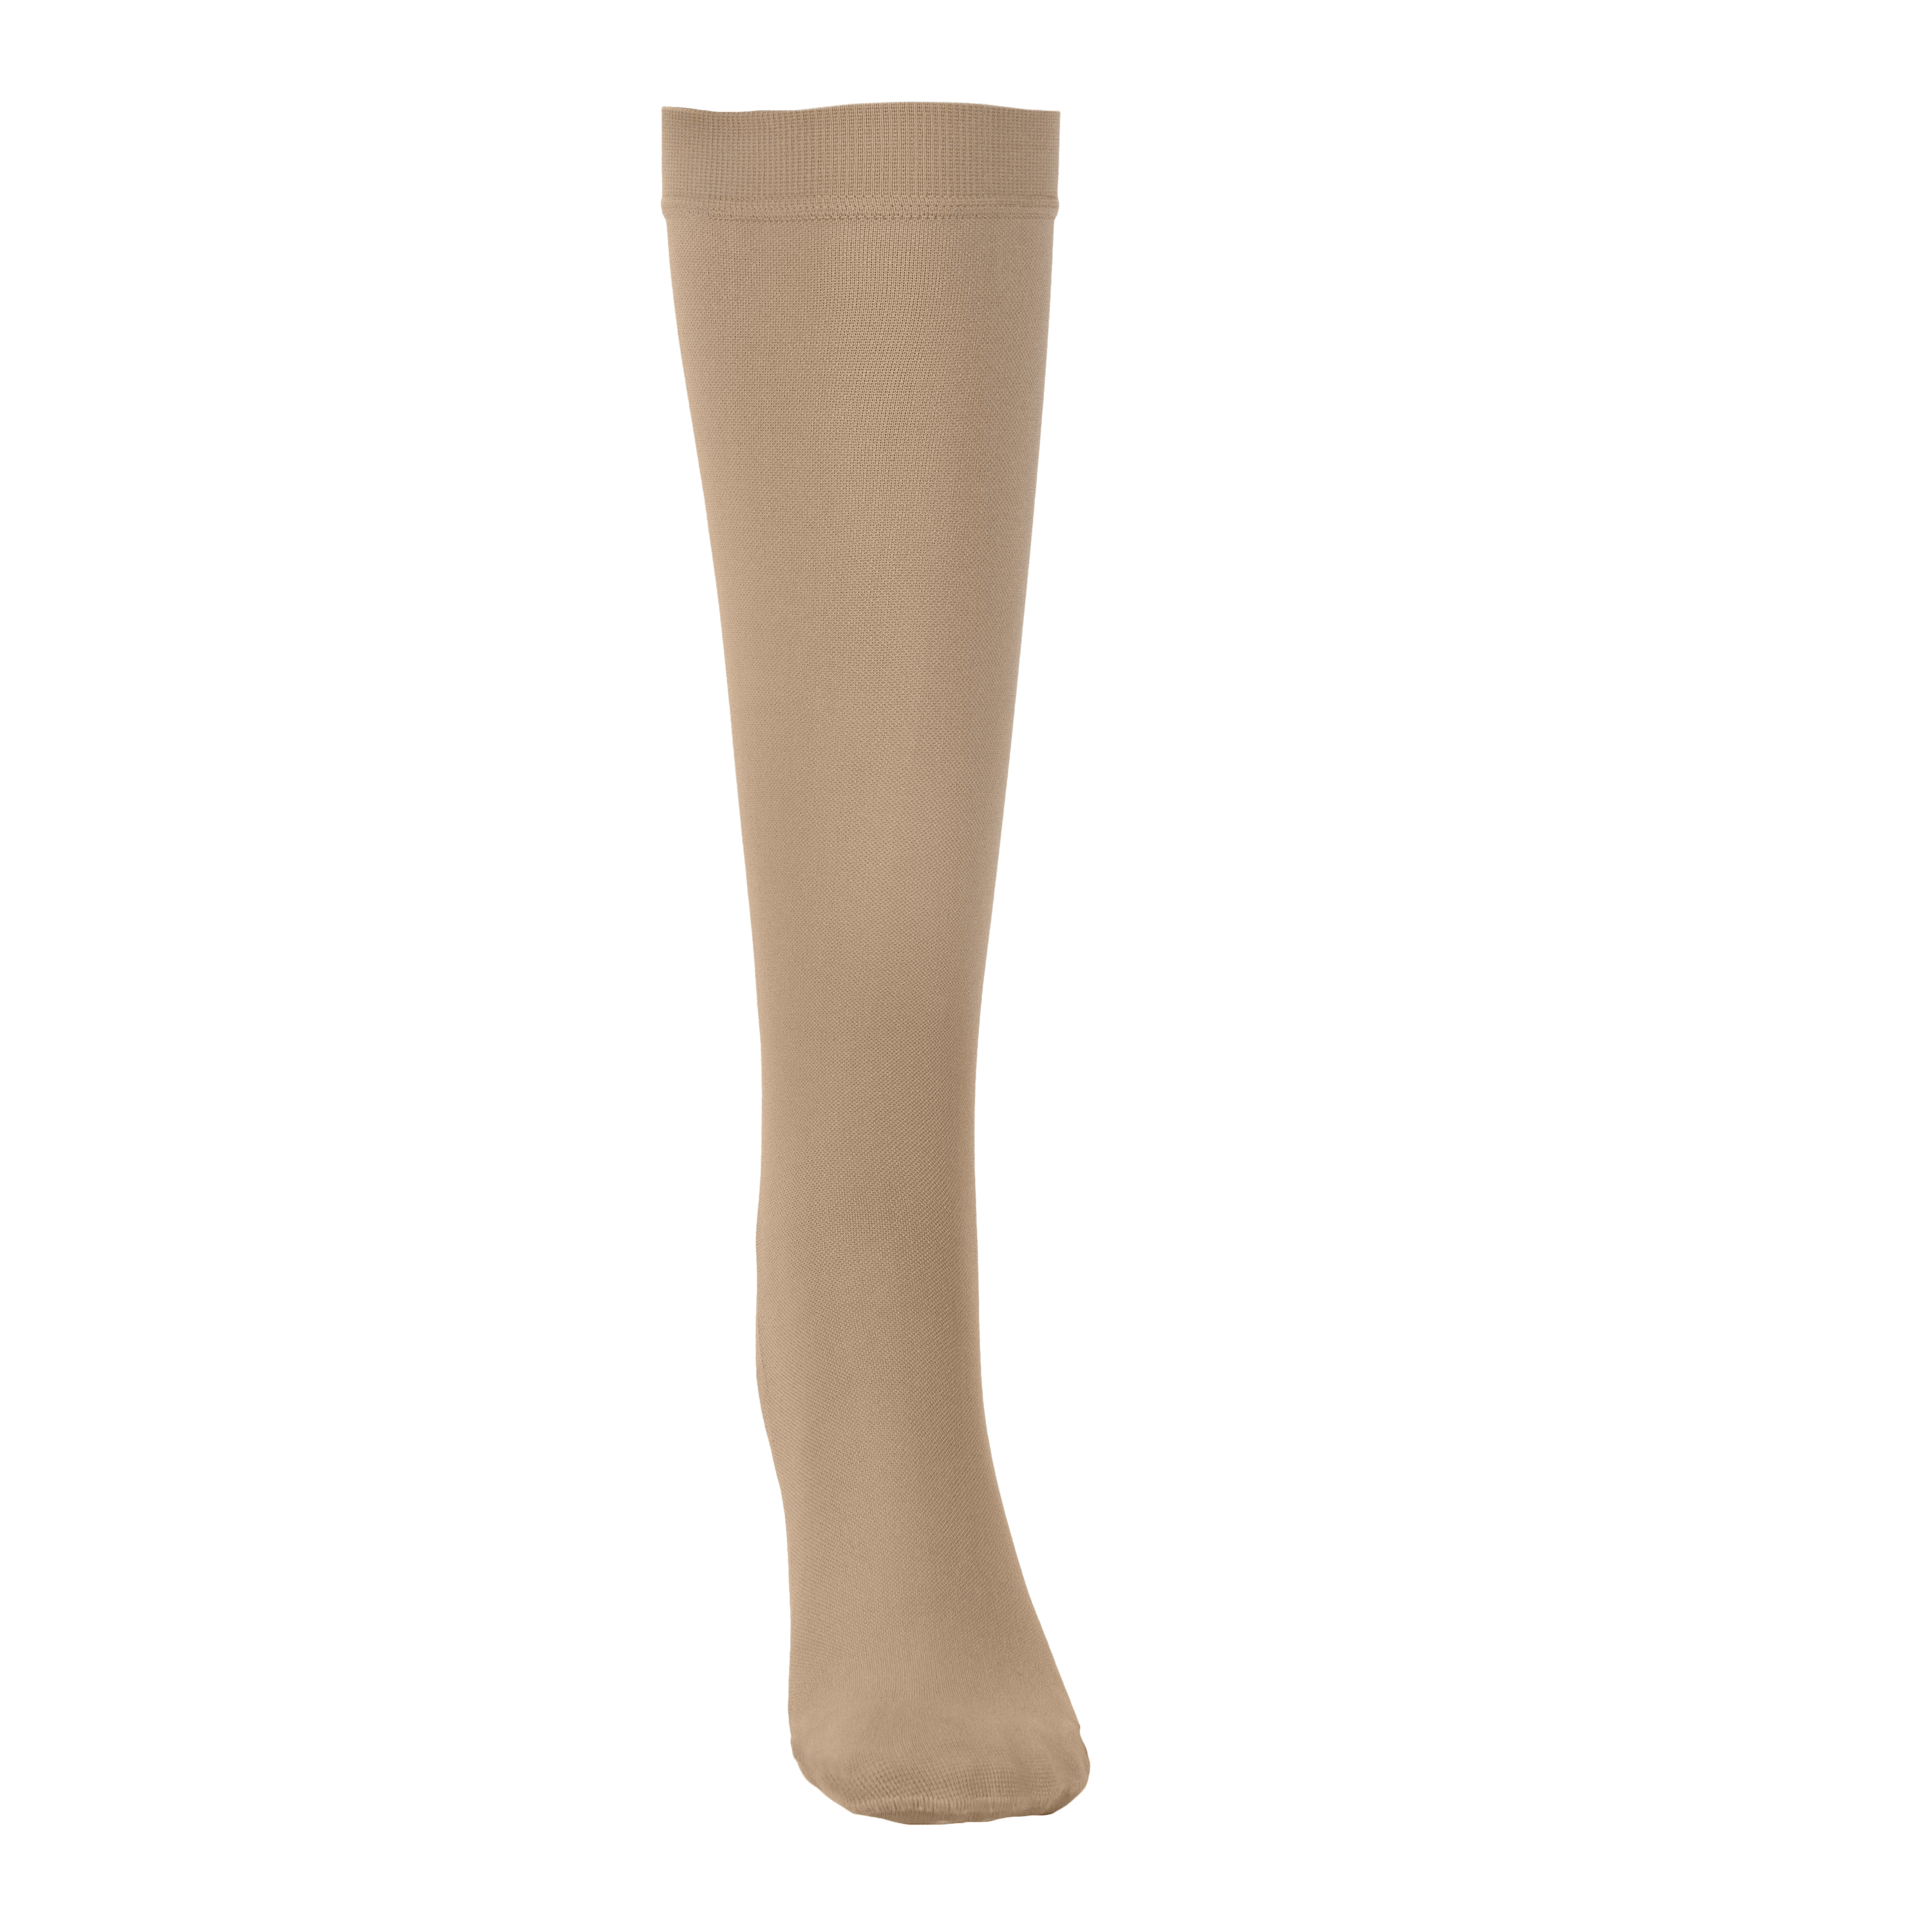 Mojo USA Graduated Compression Socks 20-30mmHg - Beige Size Small Unisex  A201BE1